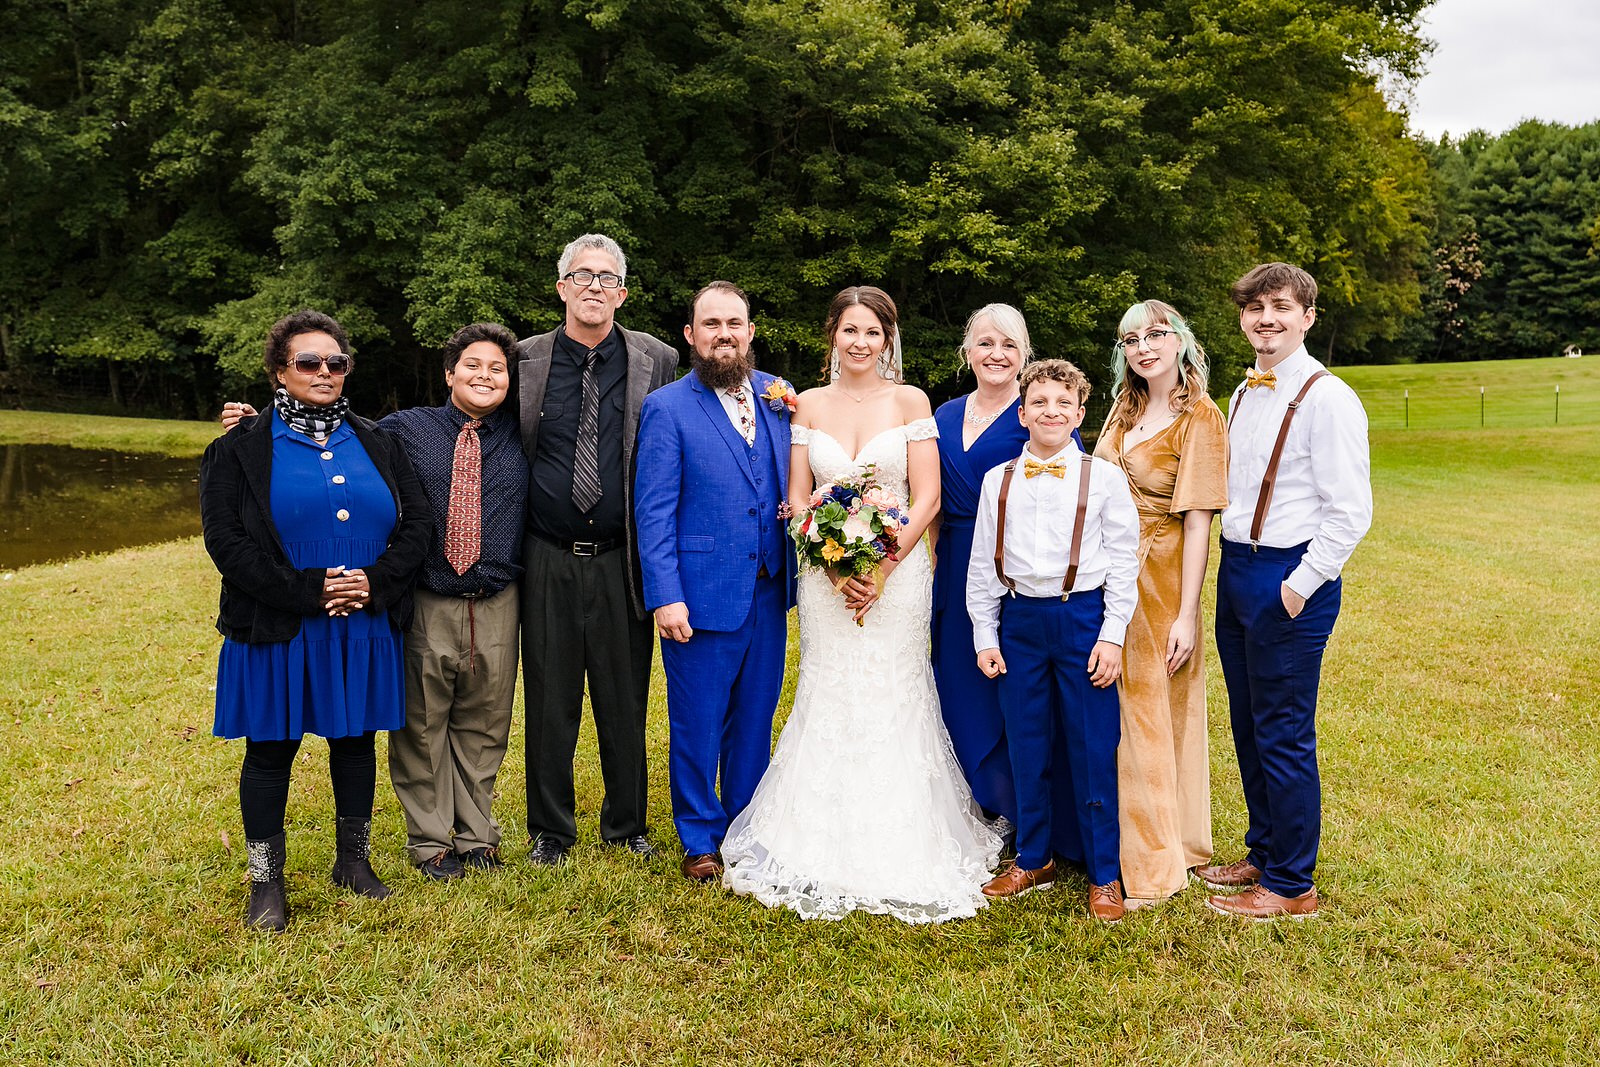 Family Formals at a farm wedding